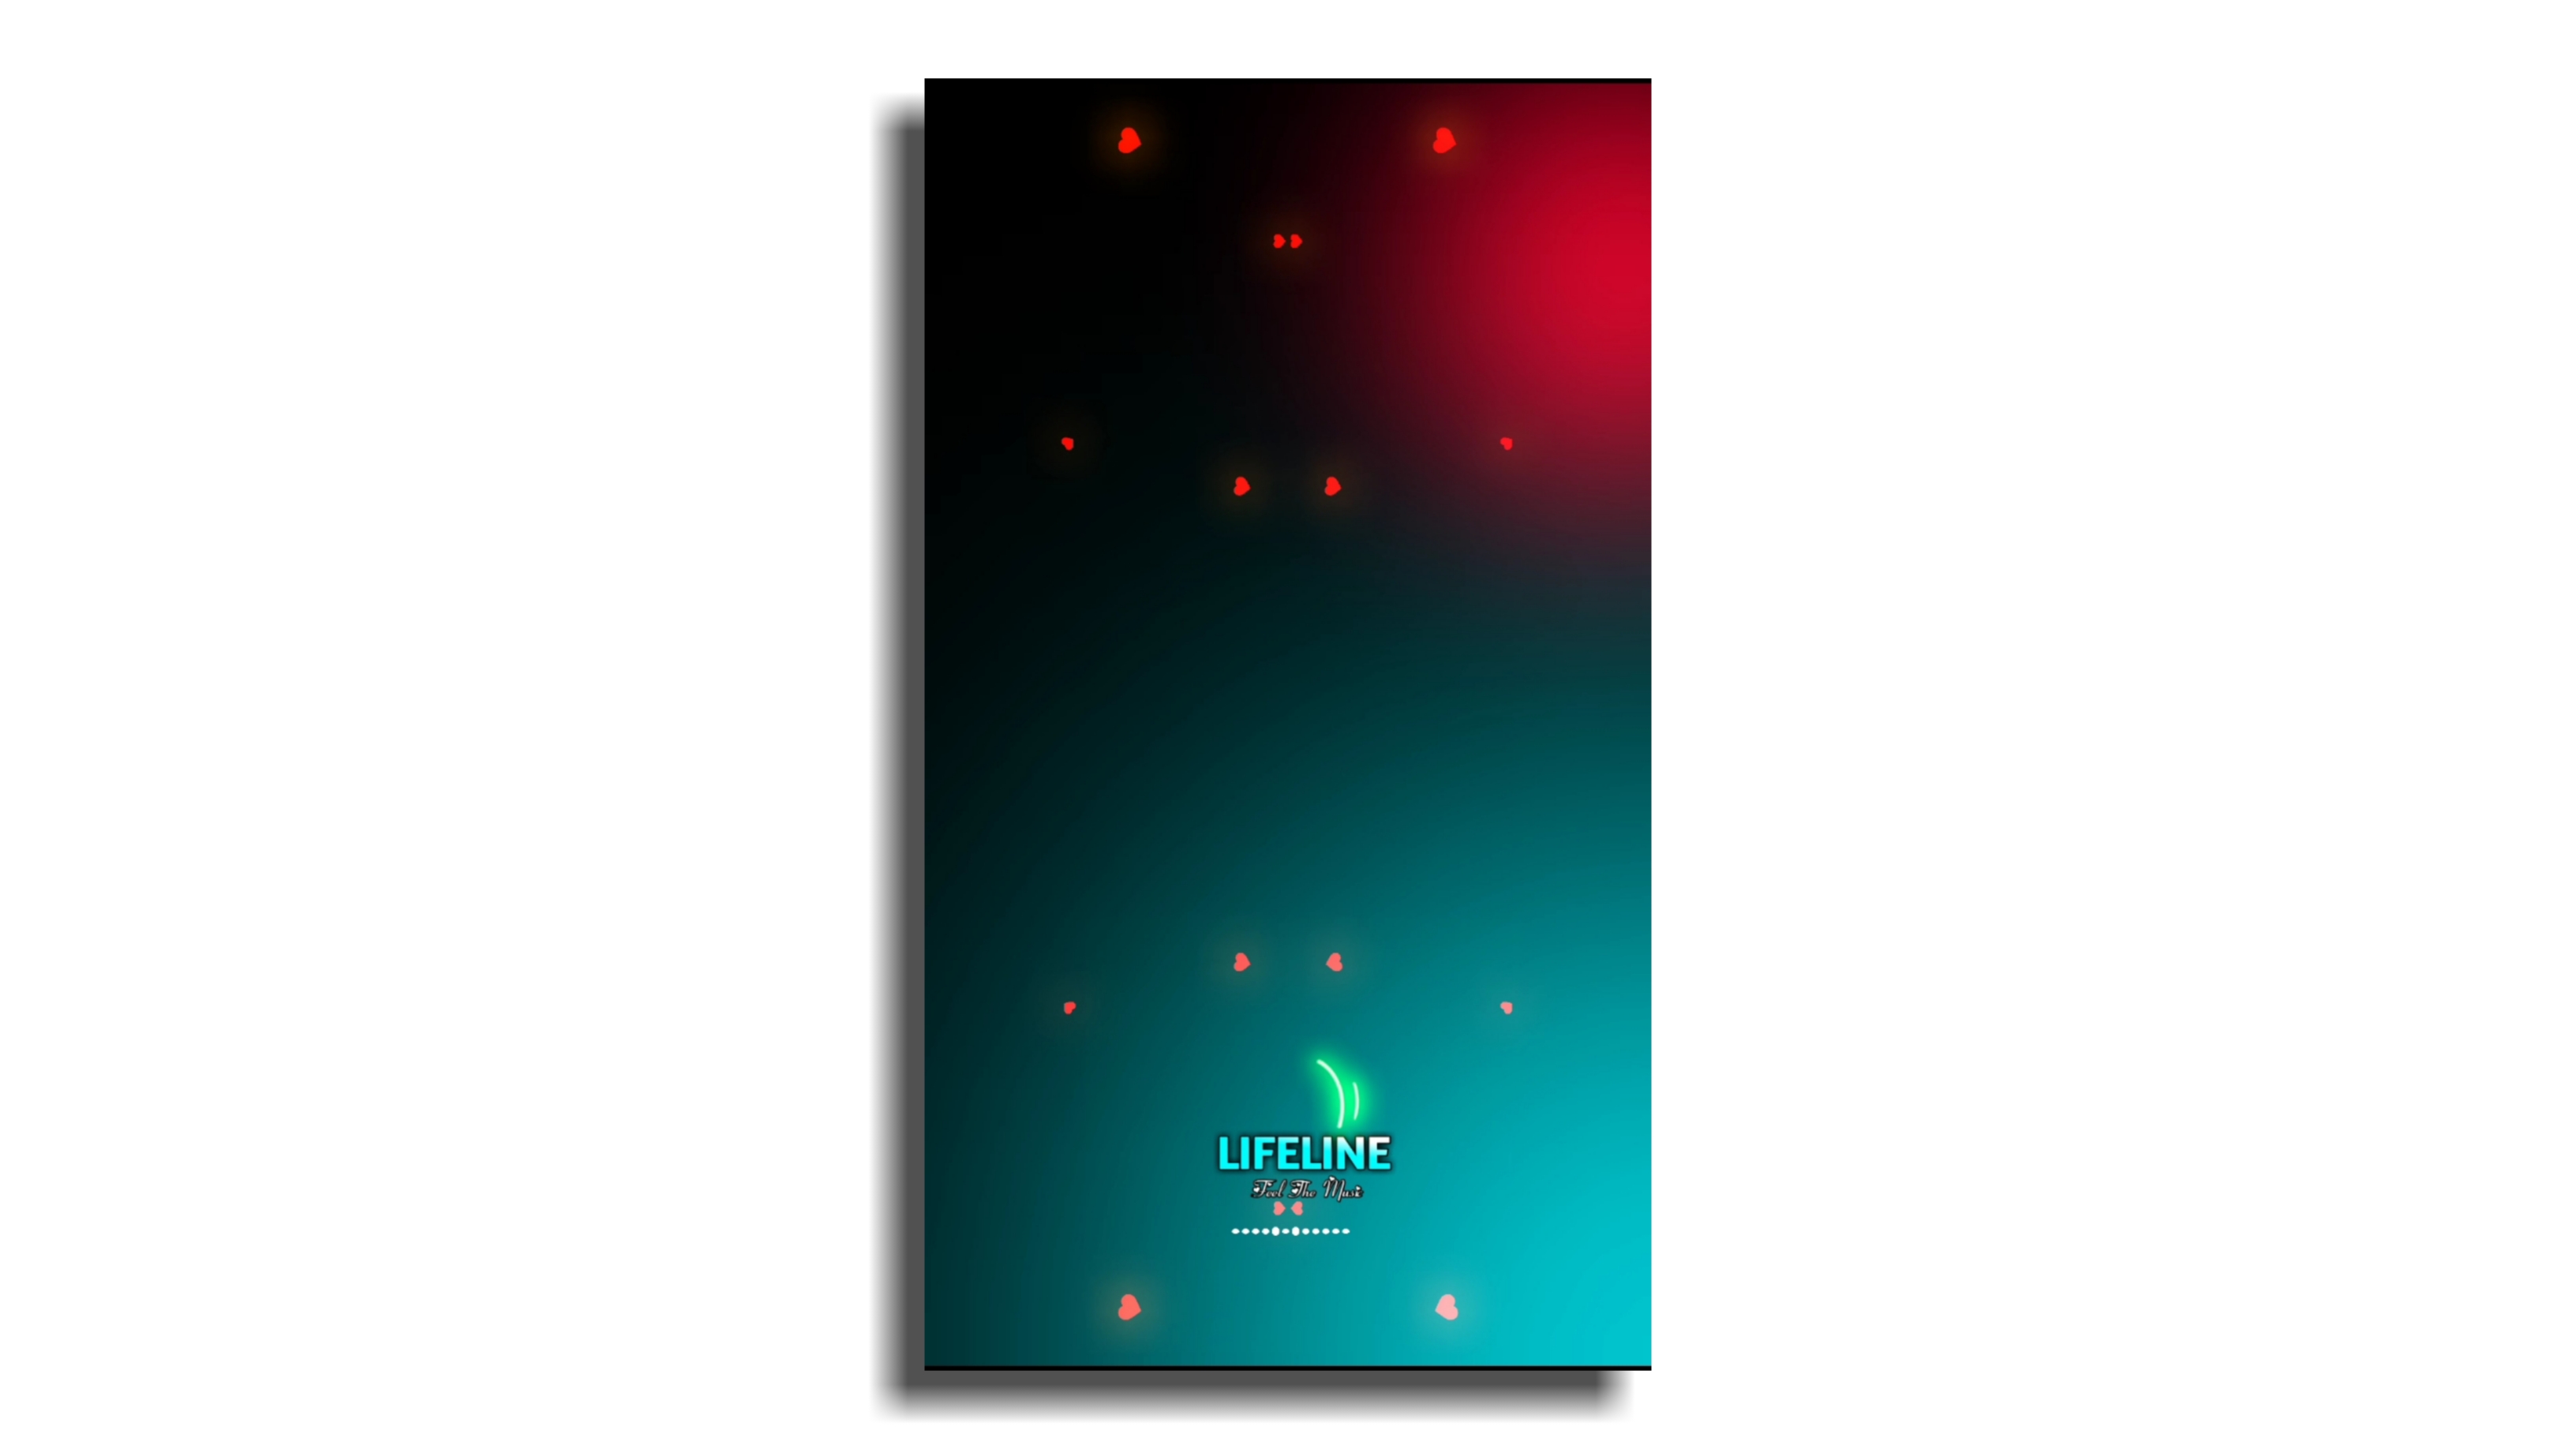 Lifeline New Portrait size Black Screen Template Download Link